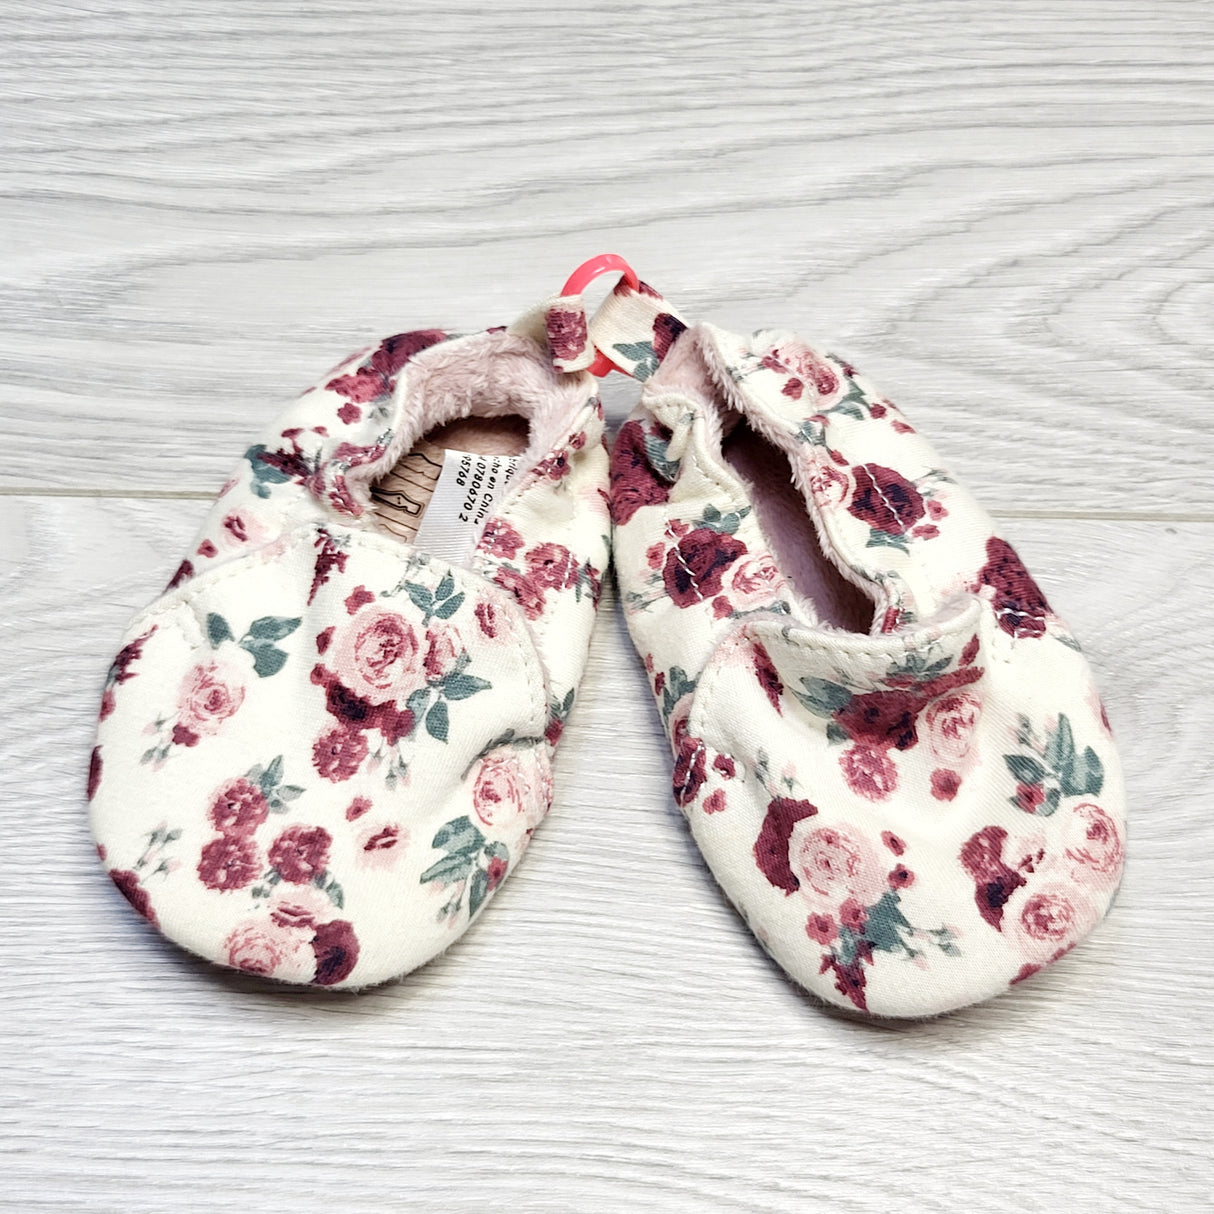 COWN1 - Floral print soft soled shoes, size 1/2 (infant)